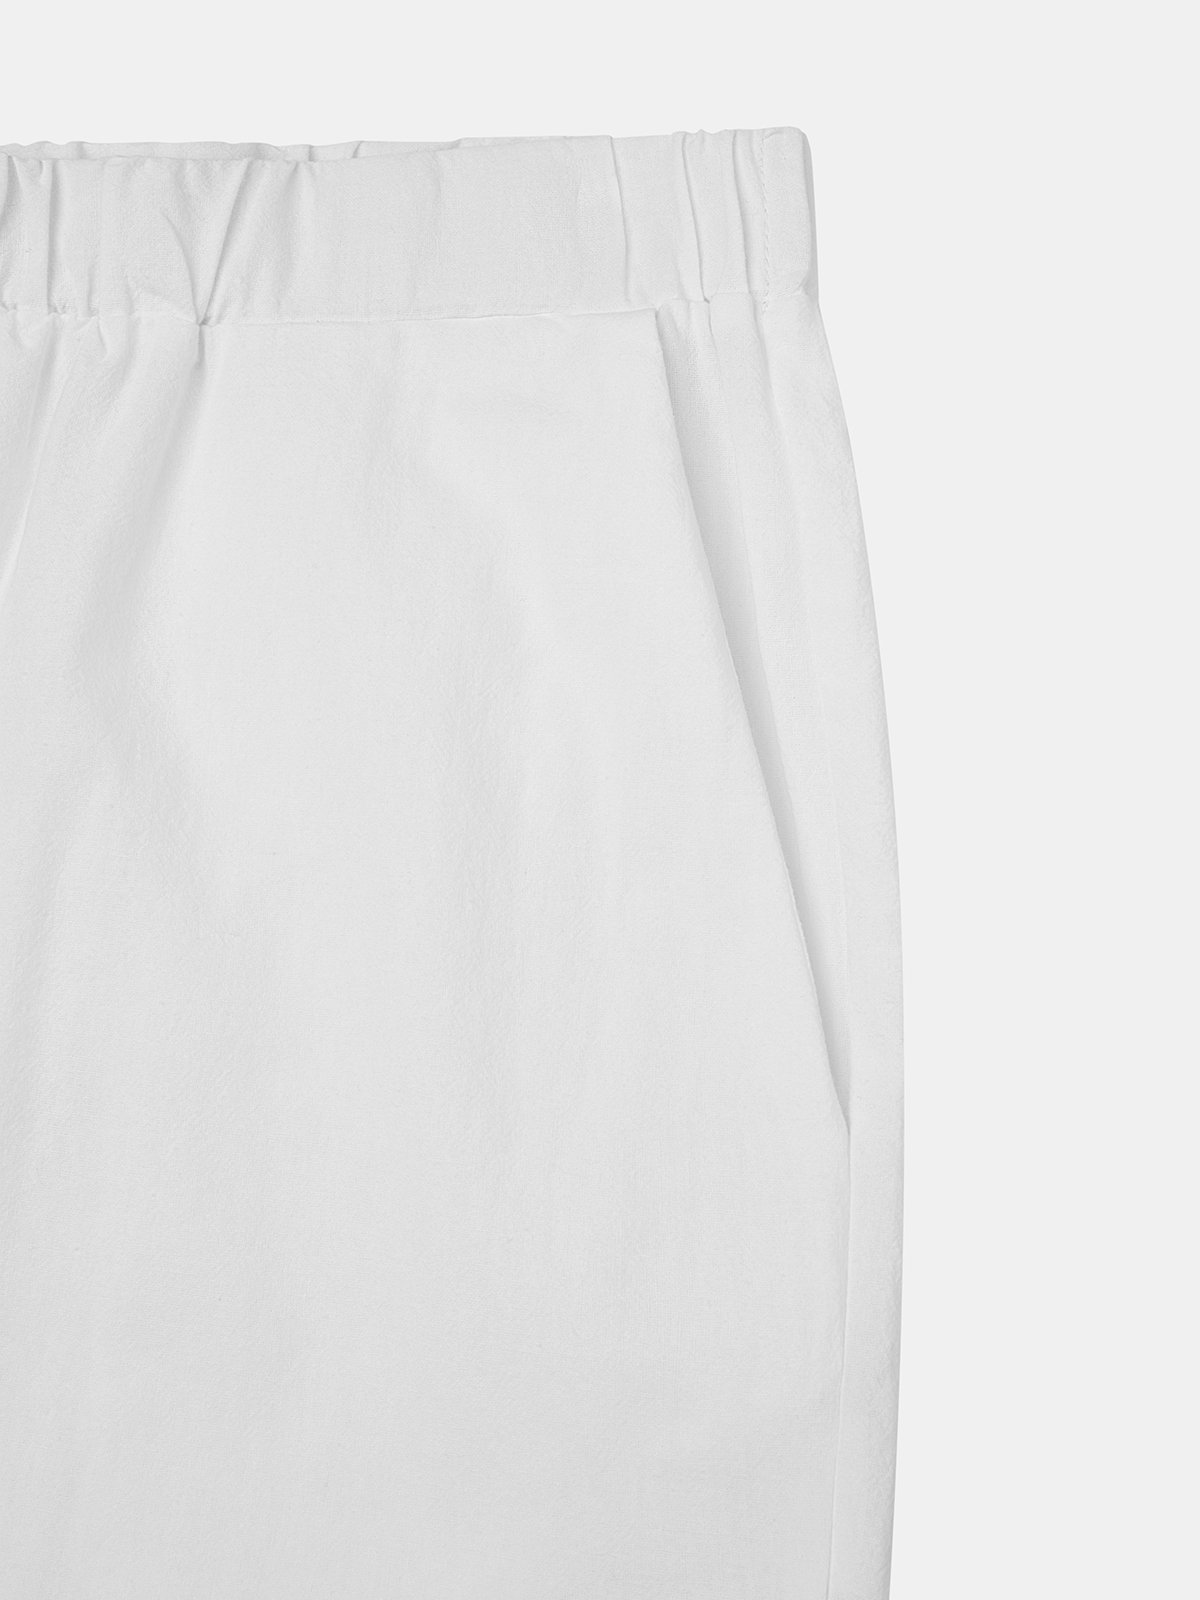 Hardaddy Tropical Cotton Bermuda Shorts